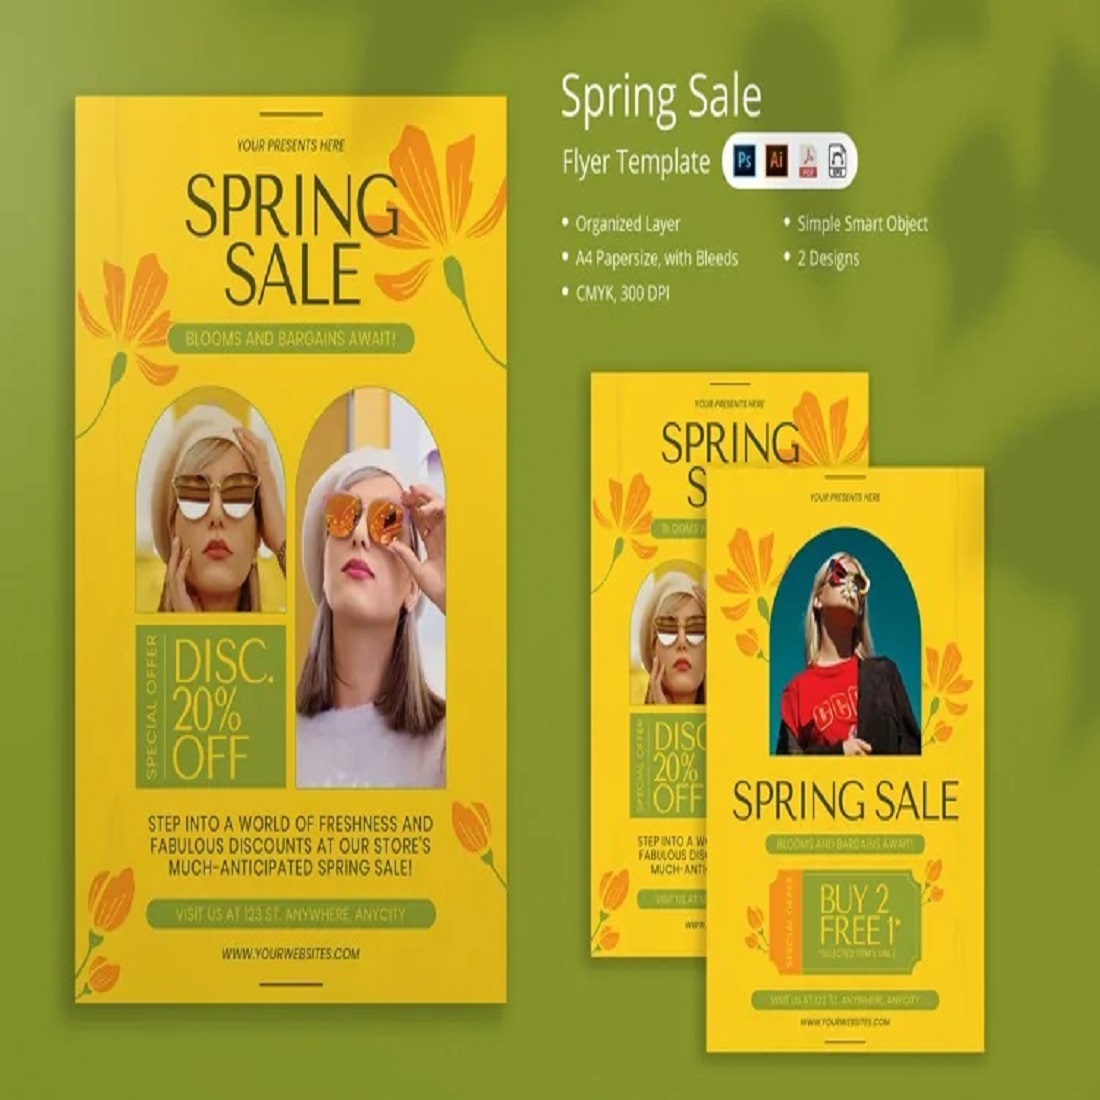 Spring Sale Flyer cover image.